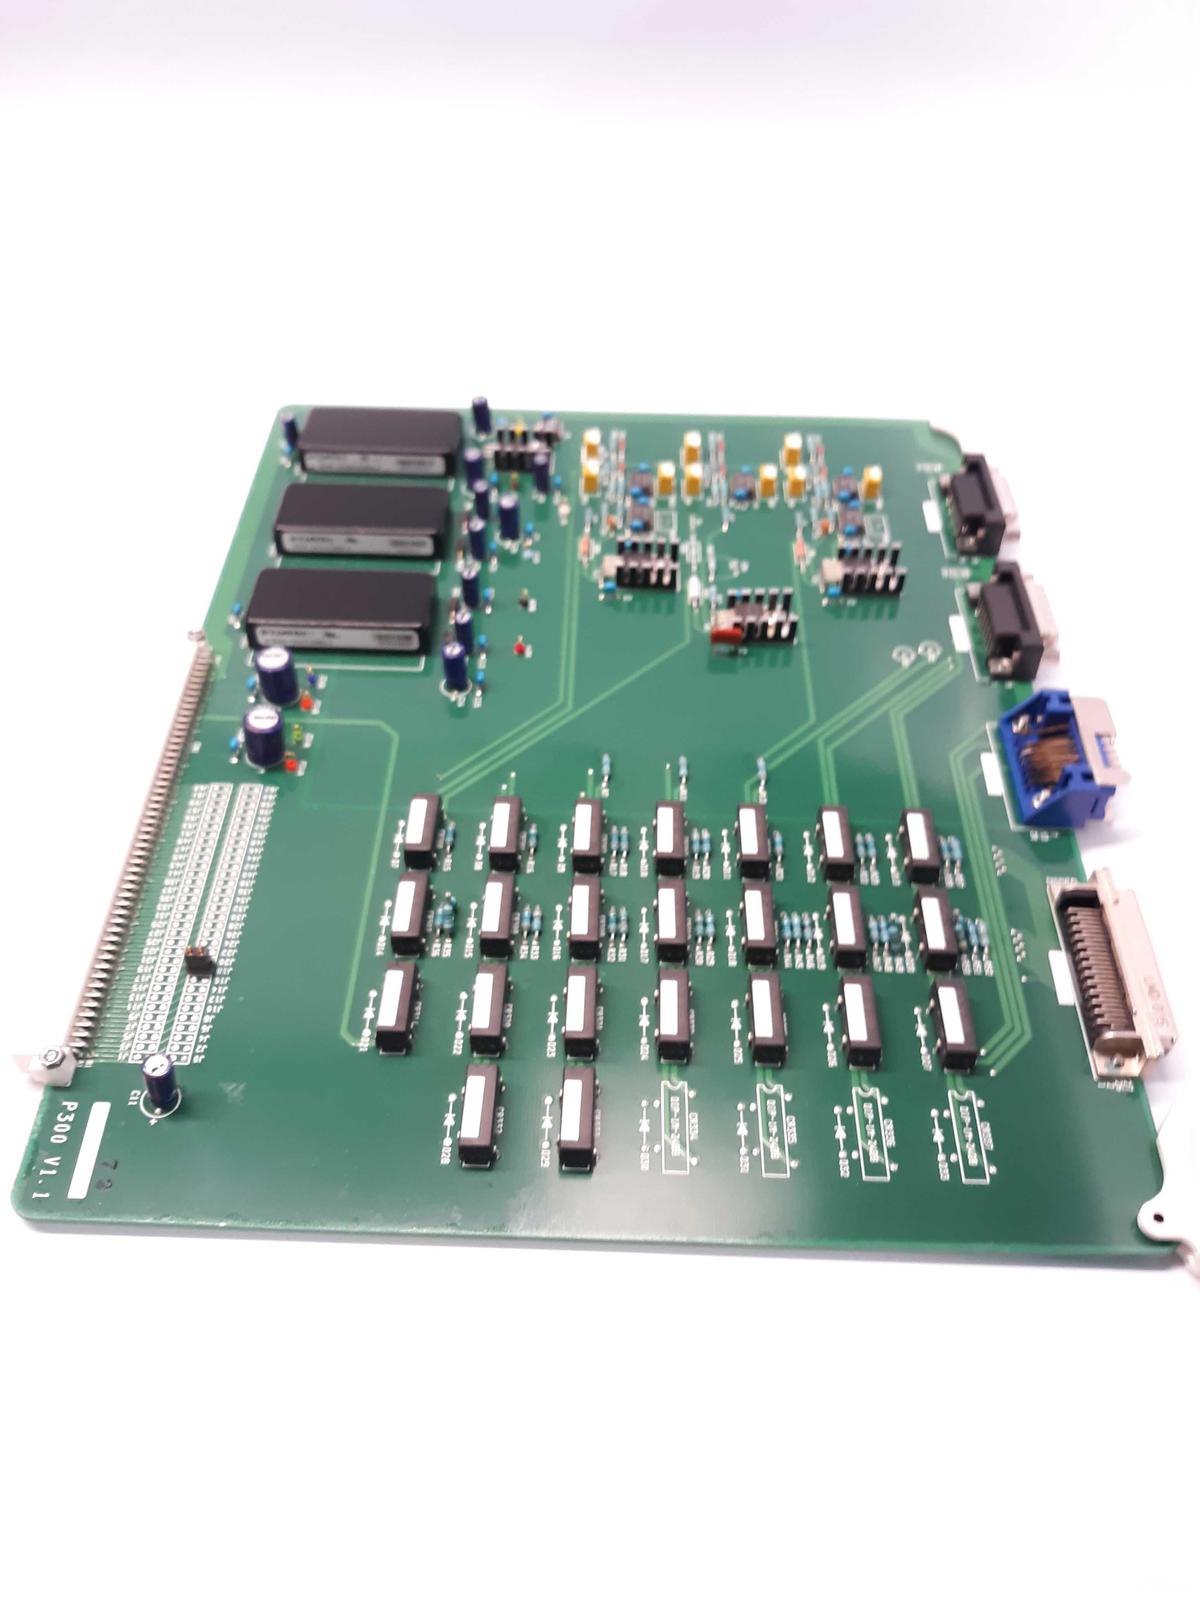 Primary image for Datel P330-72-1 Circuit Board Module P300 V1.1 